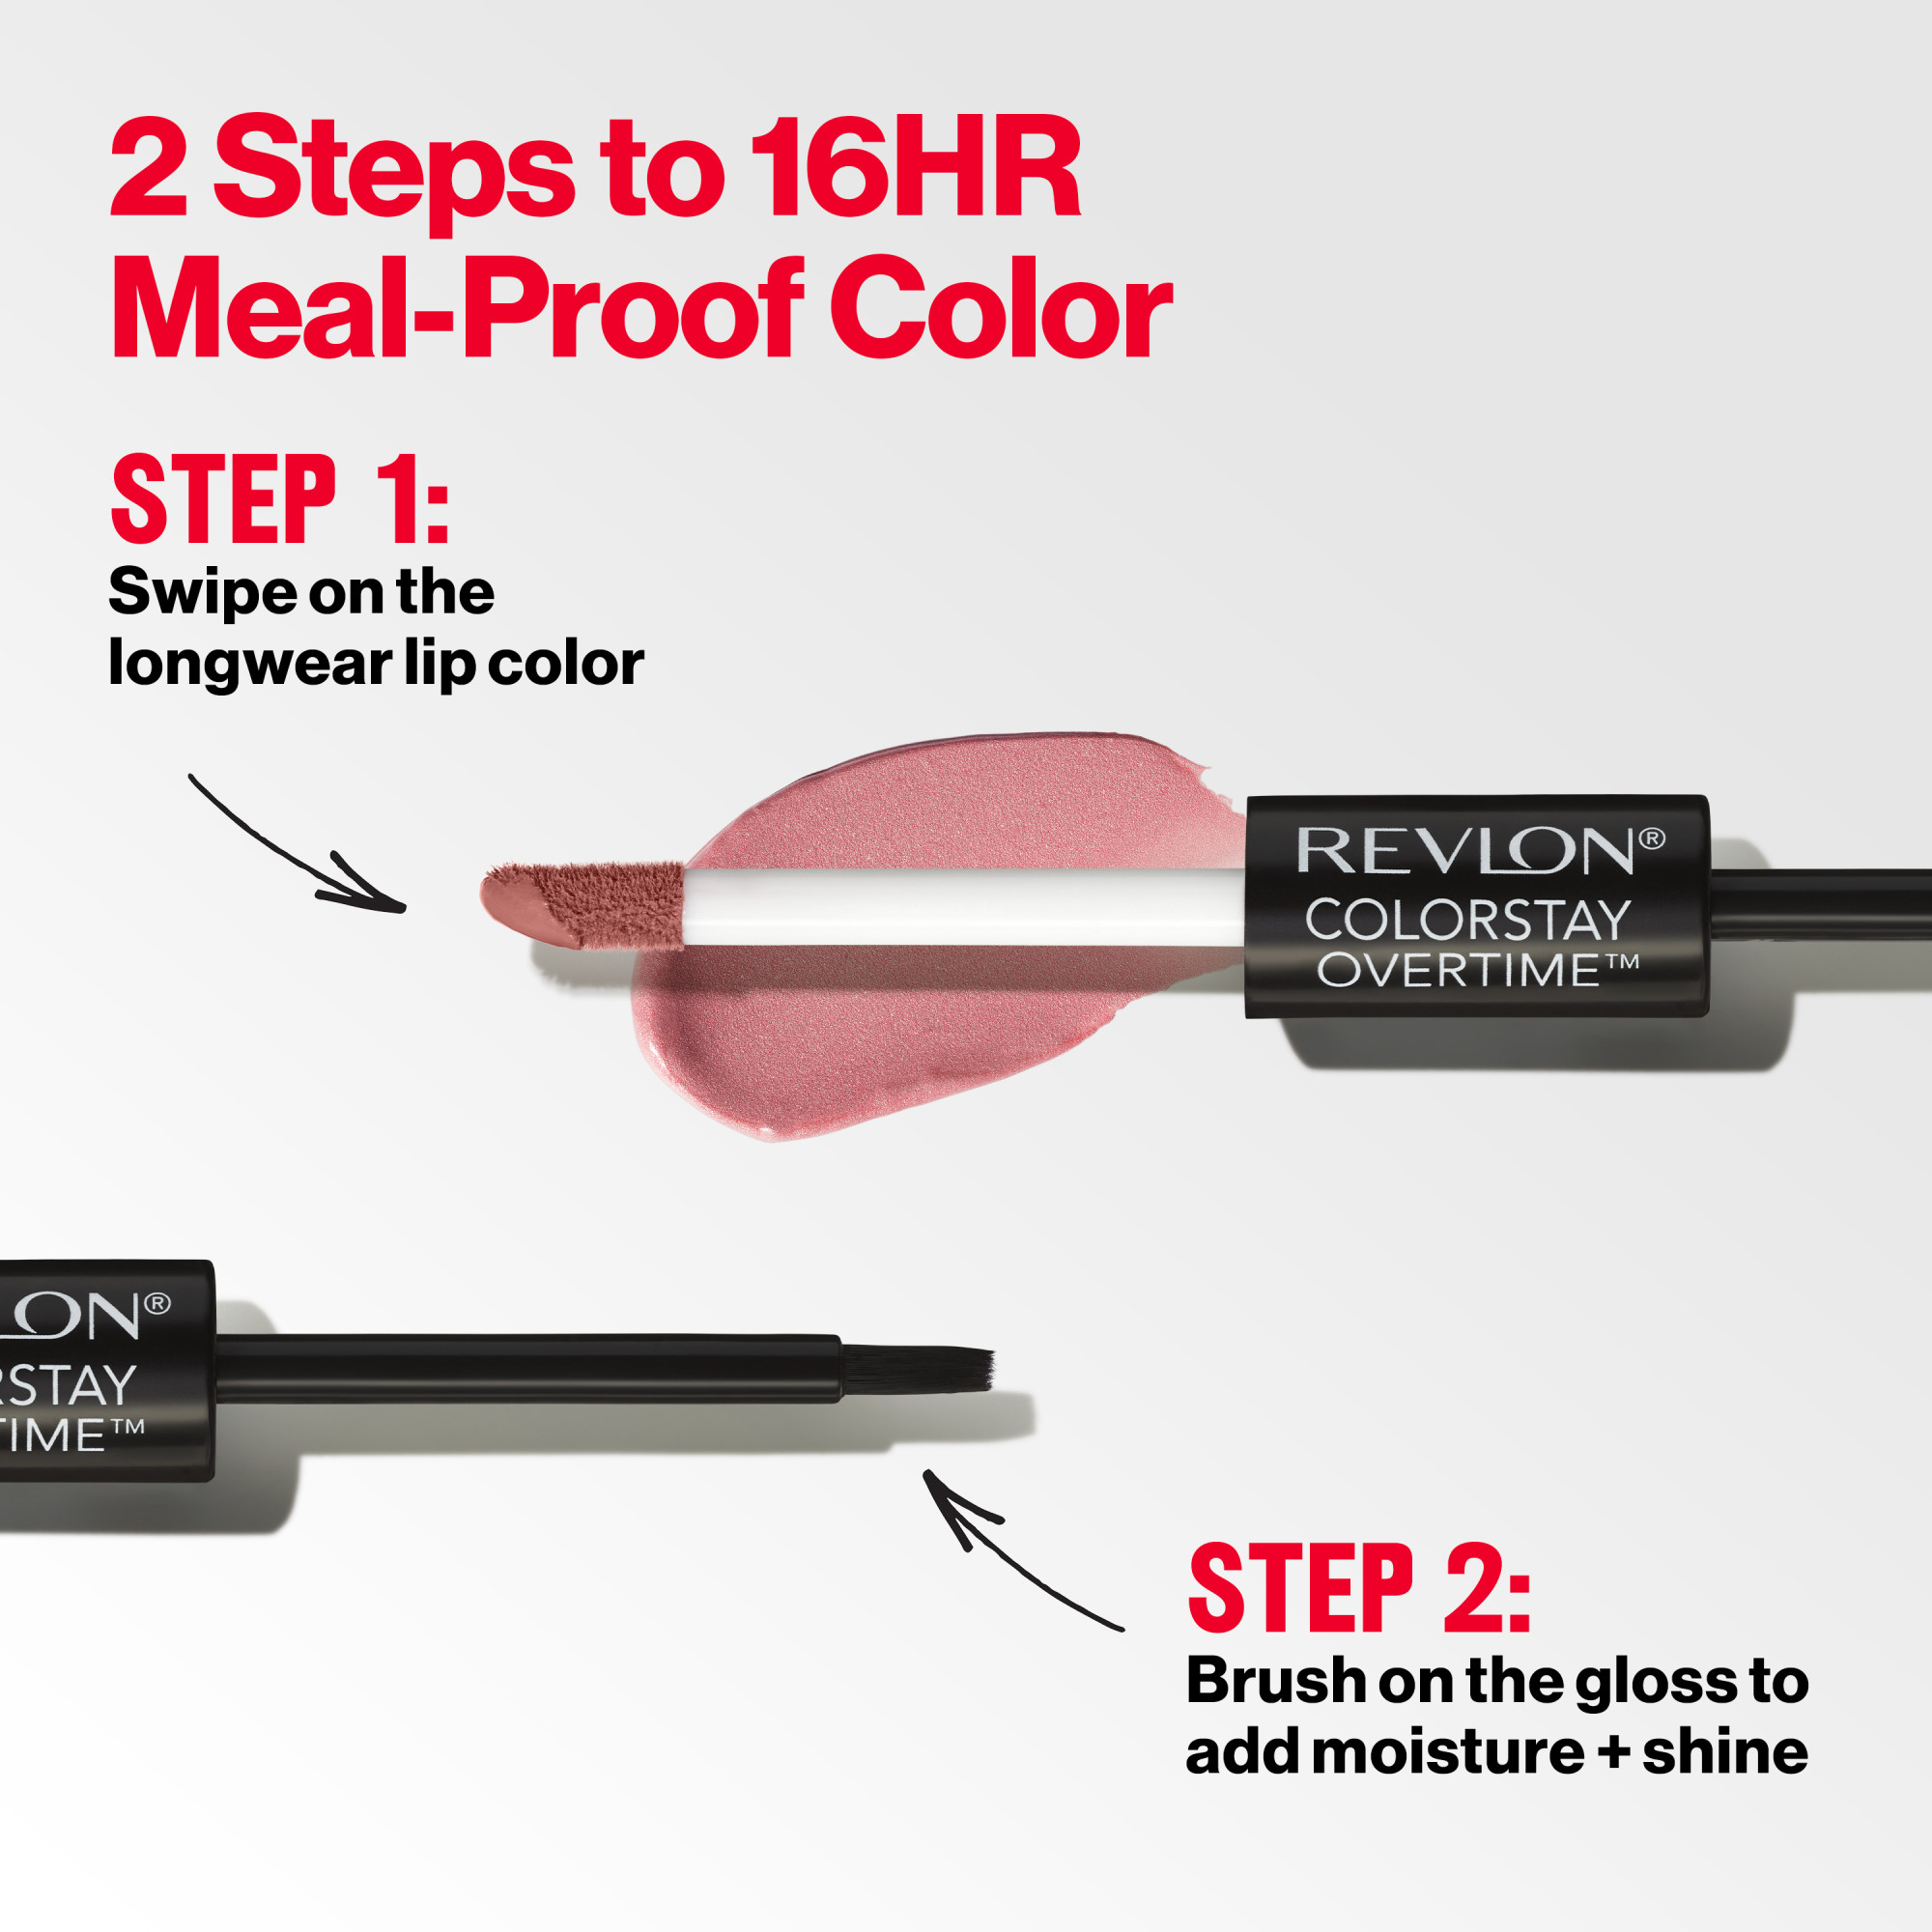 Revlon ColorStay Overtime Longwearing Gloss Lipstick with Vitamin E, 350 Bare Maximum, 0.07 fl oz - image 5 of 8